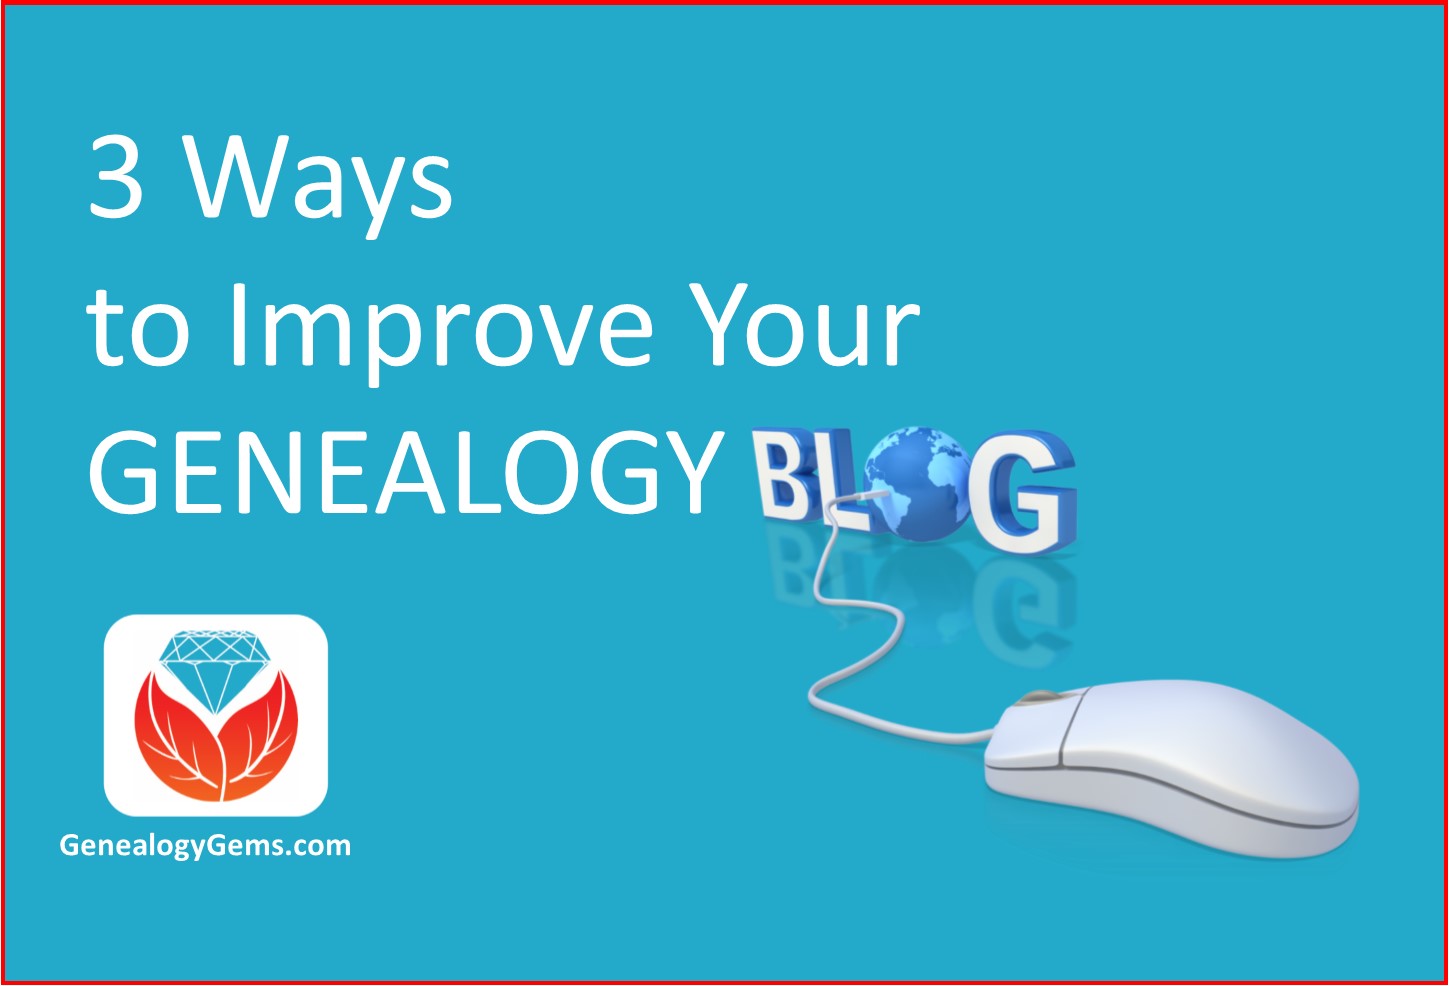 3 Ways to Improve Your Genealogy Blog